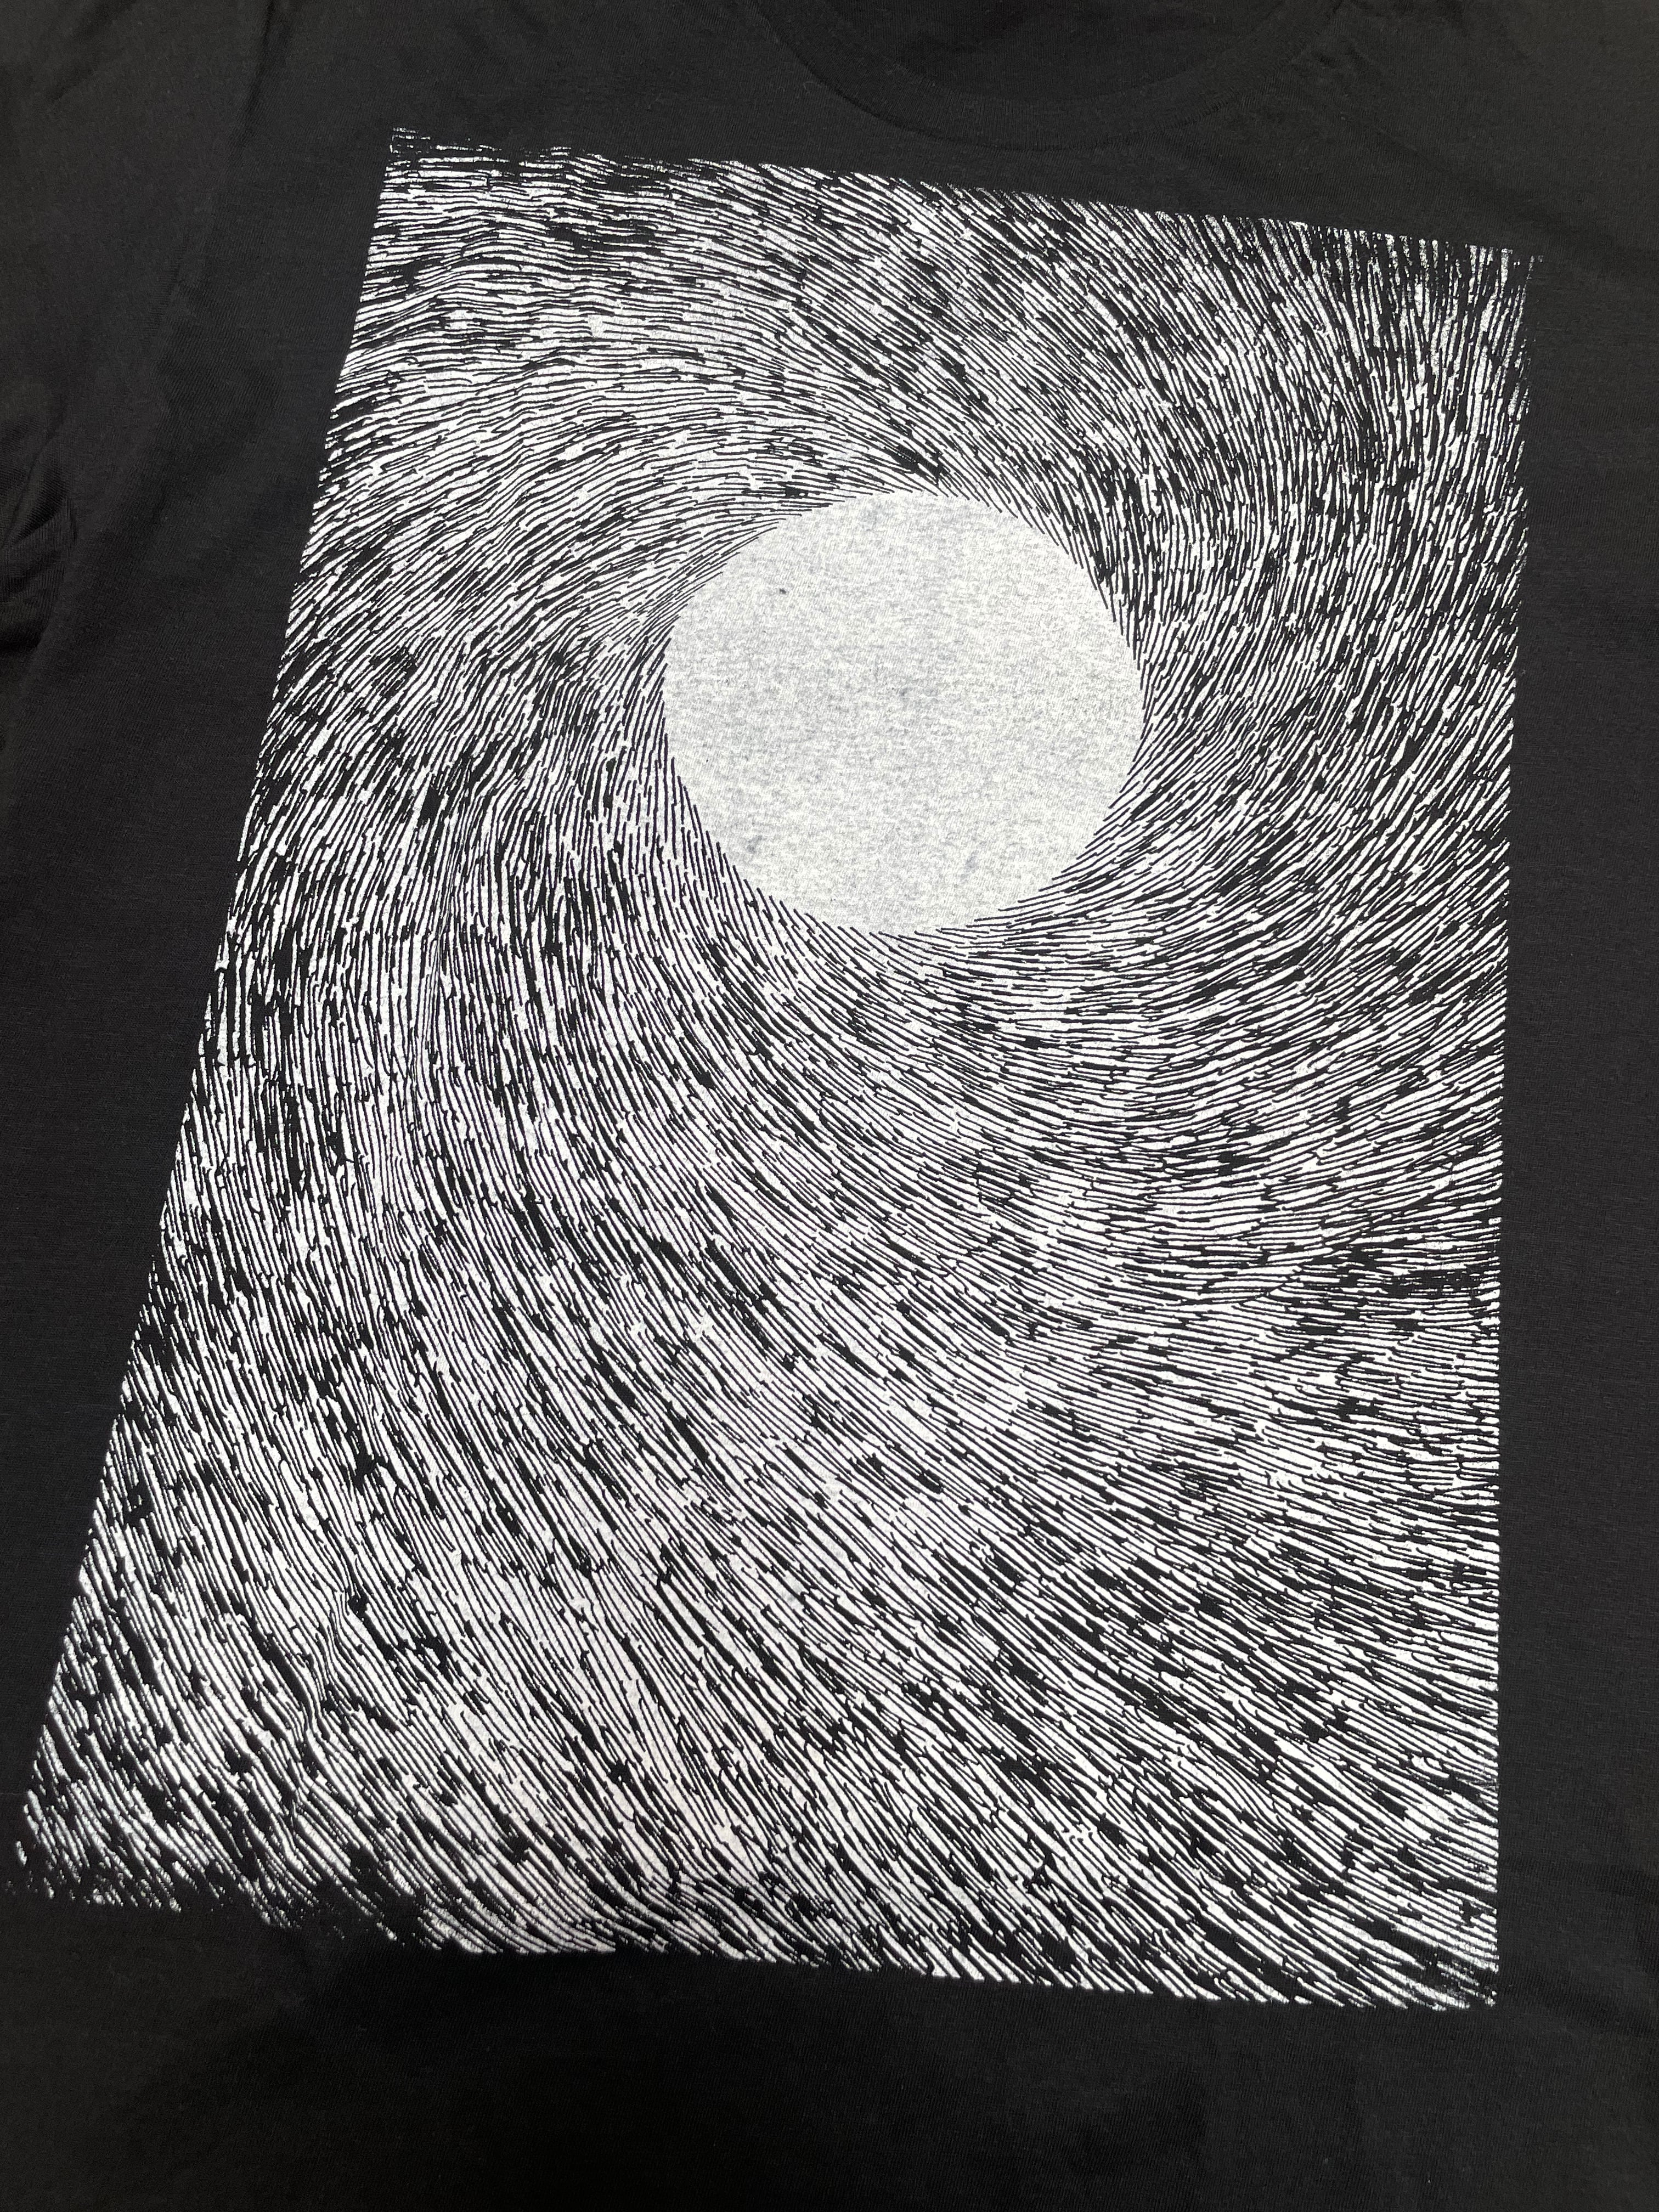 【THE WORLD  BEHIND】 Full moon T-shirt